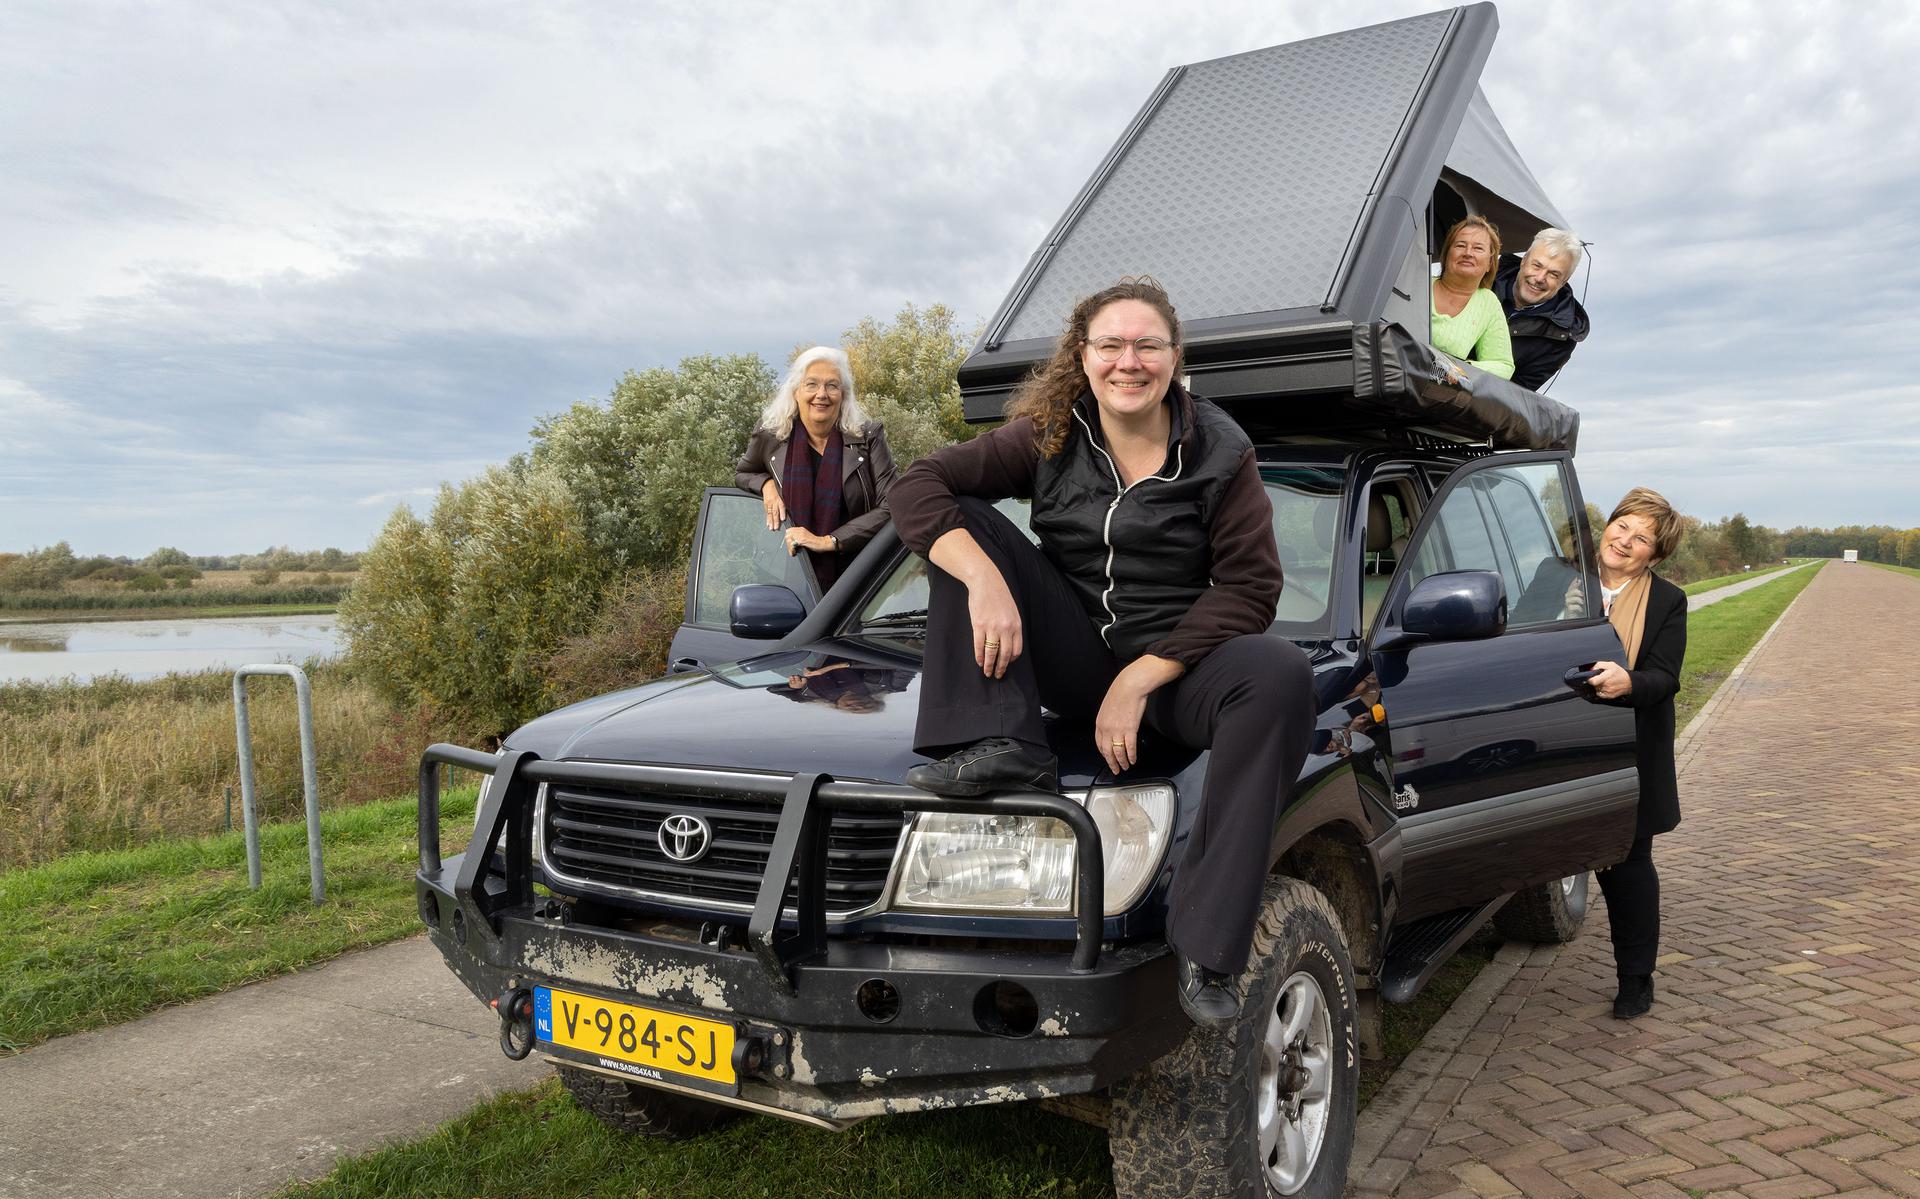 Gwen Glabbers dari Lelystad ingin melintasi Afrika dengan Toyota Land Cruiser untuk memberikan ceramah inspirasional kepada wanita